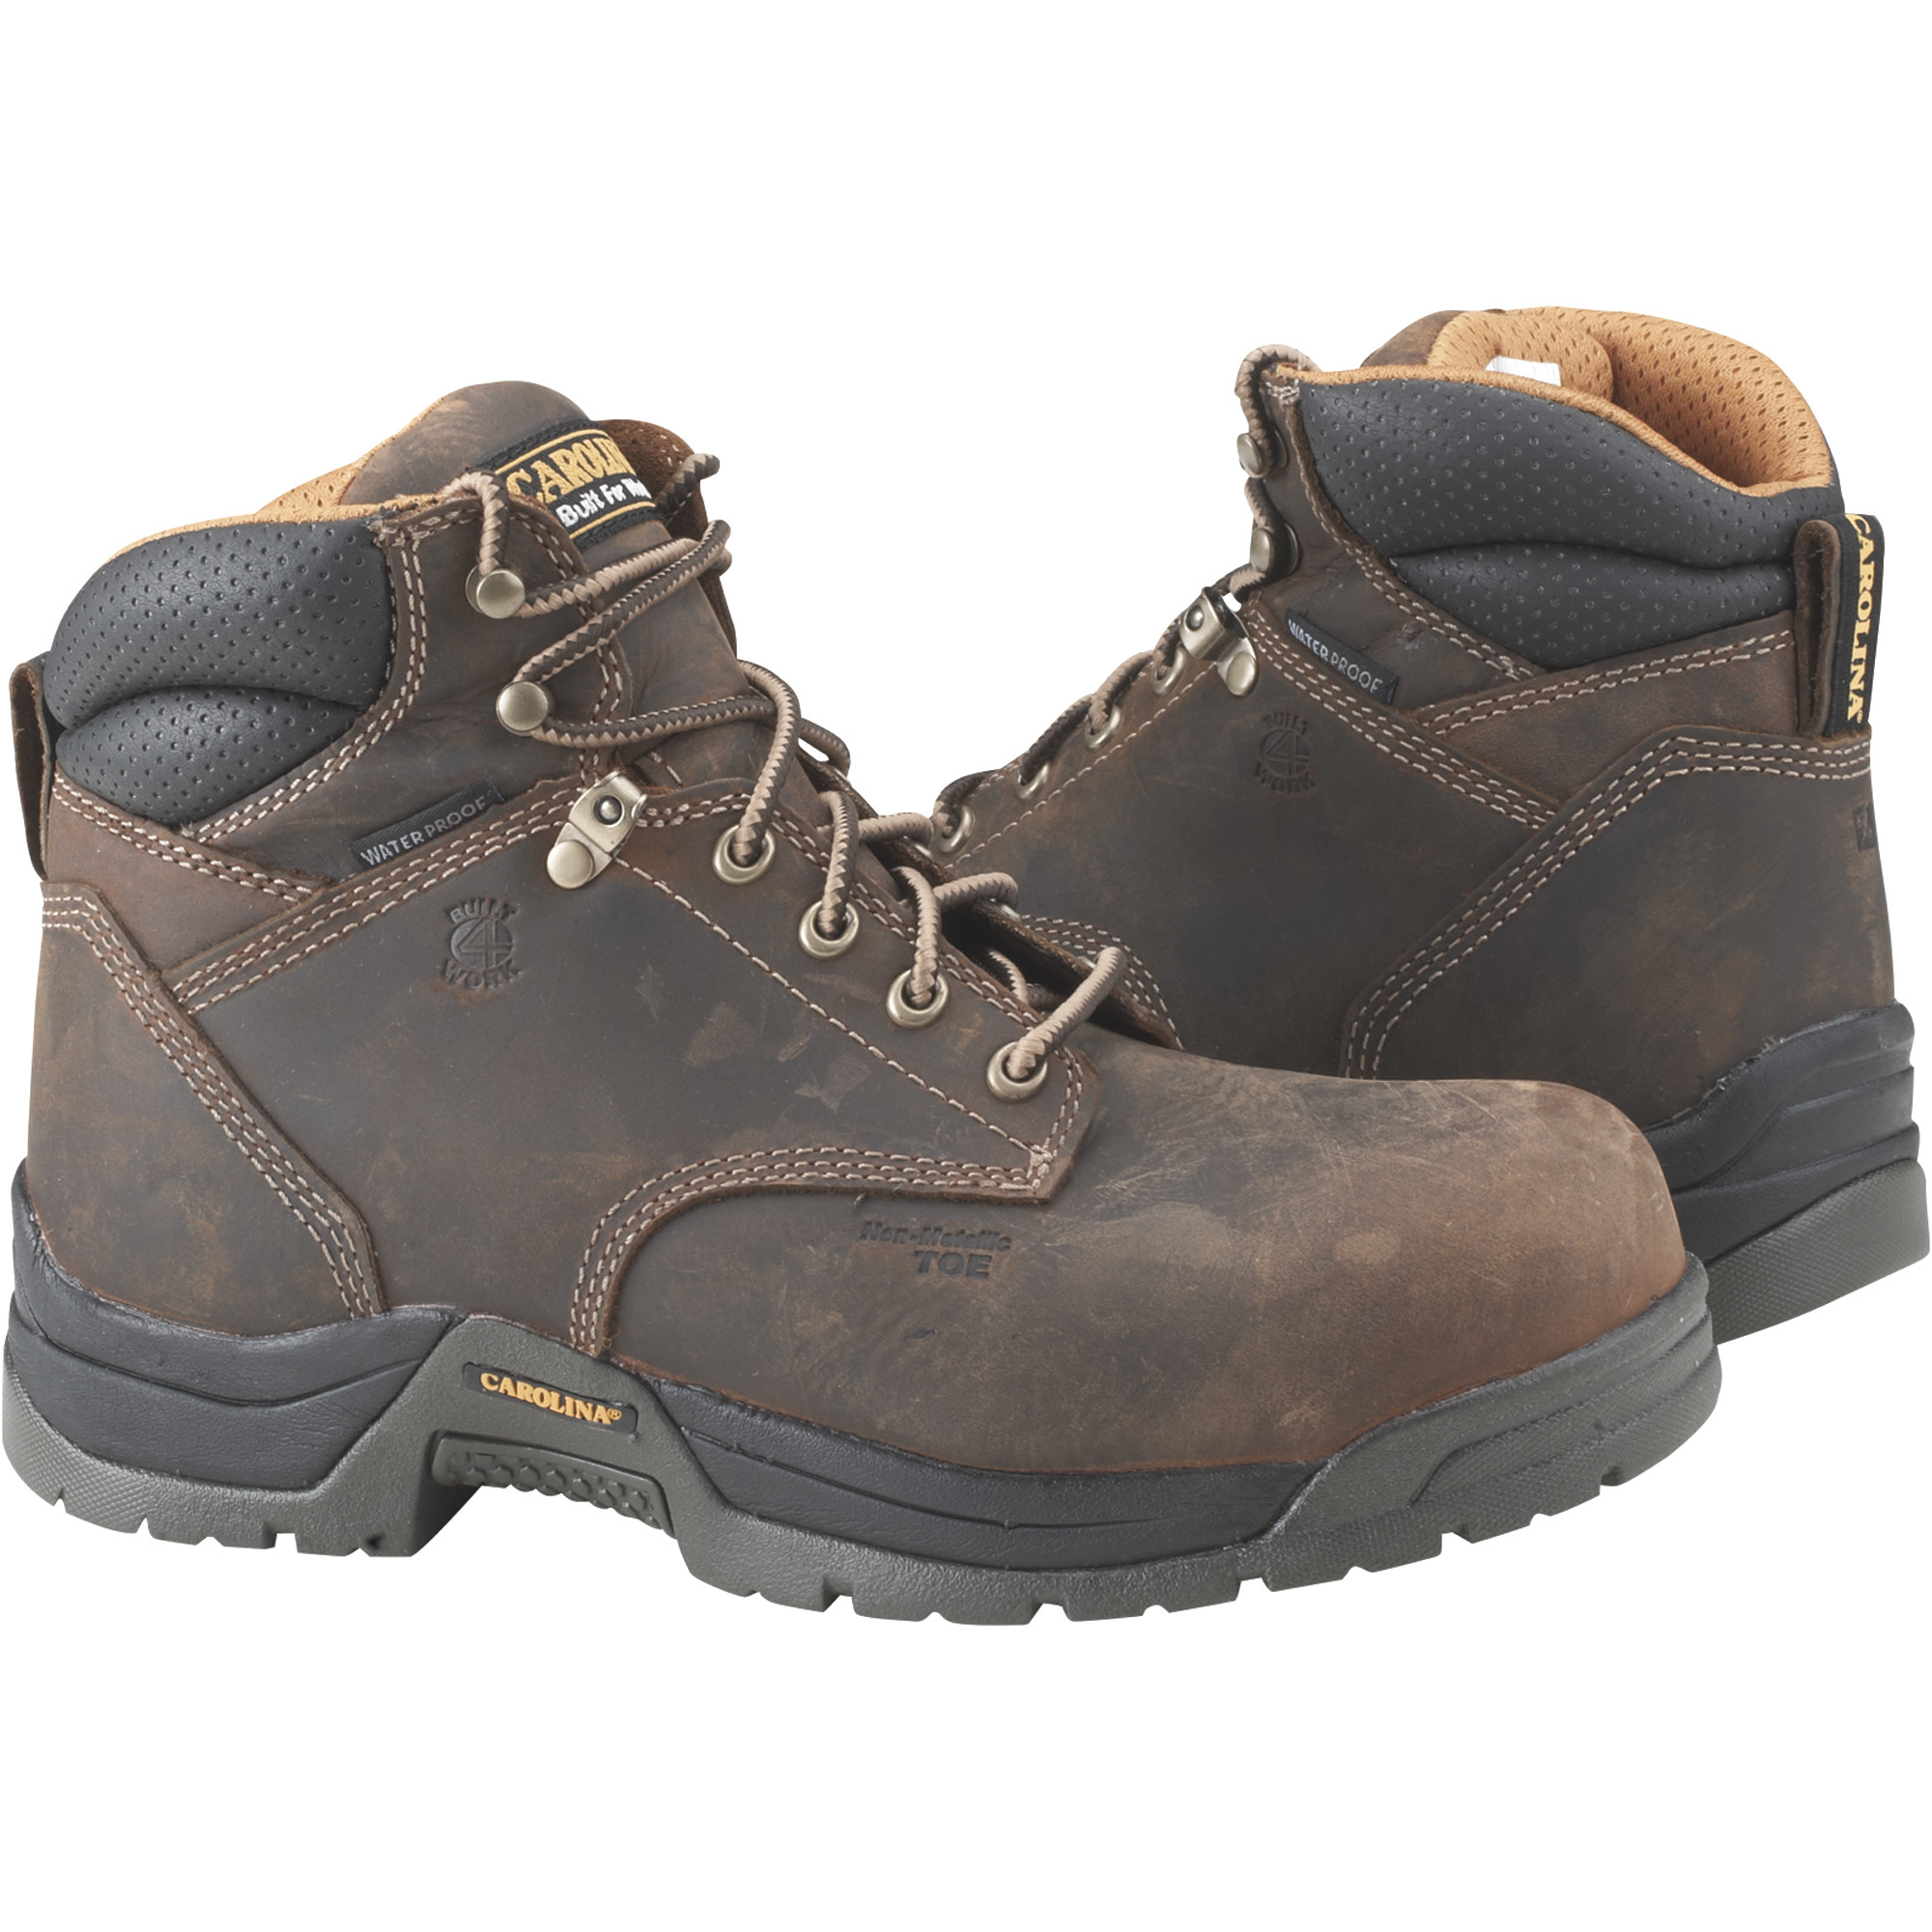 Carolina Men's 6Inch Waterproof Safety Toe Work Boots — Brown, Size 7 Wide, Model CA5520 -  Carolina Shoe, 726363512768